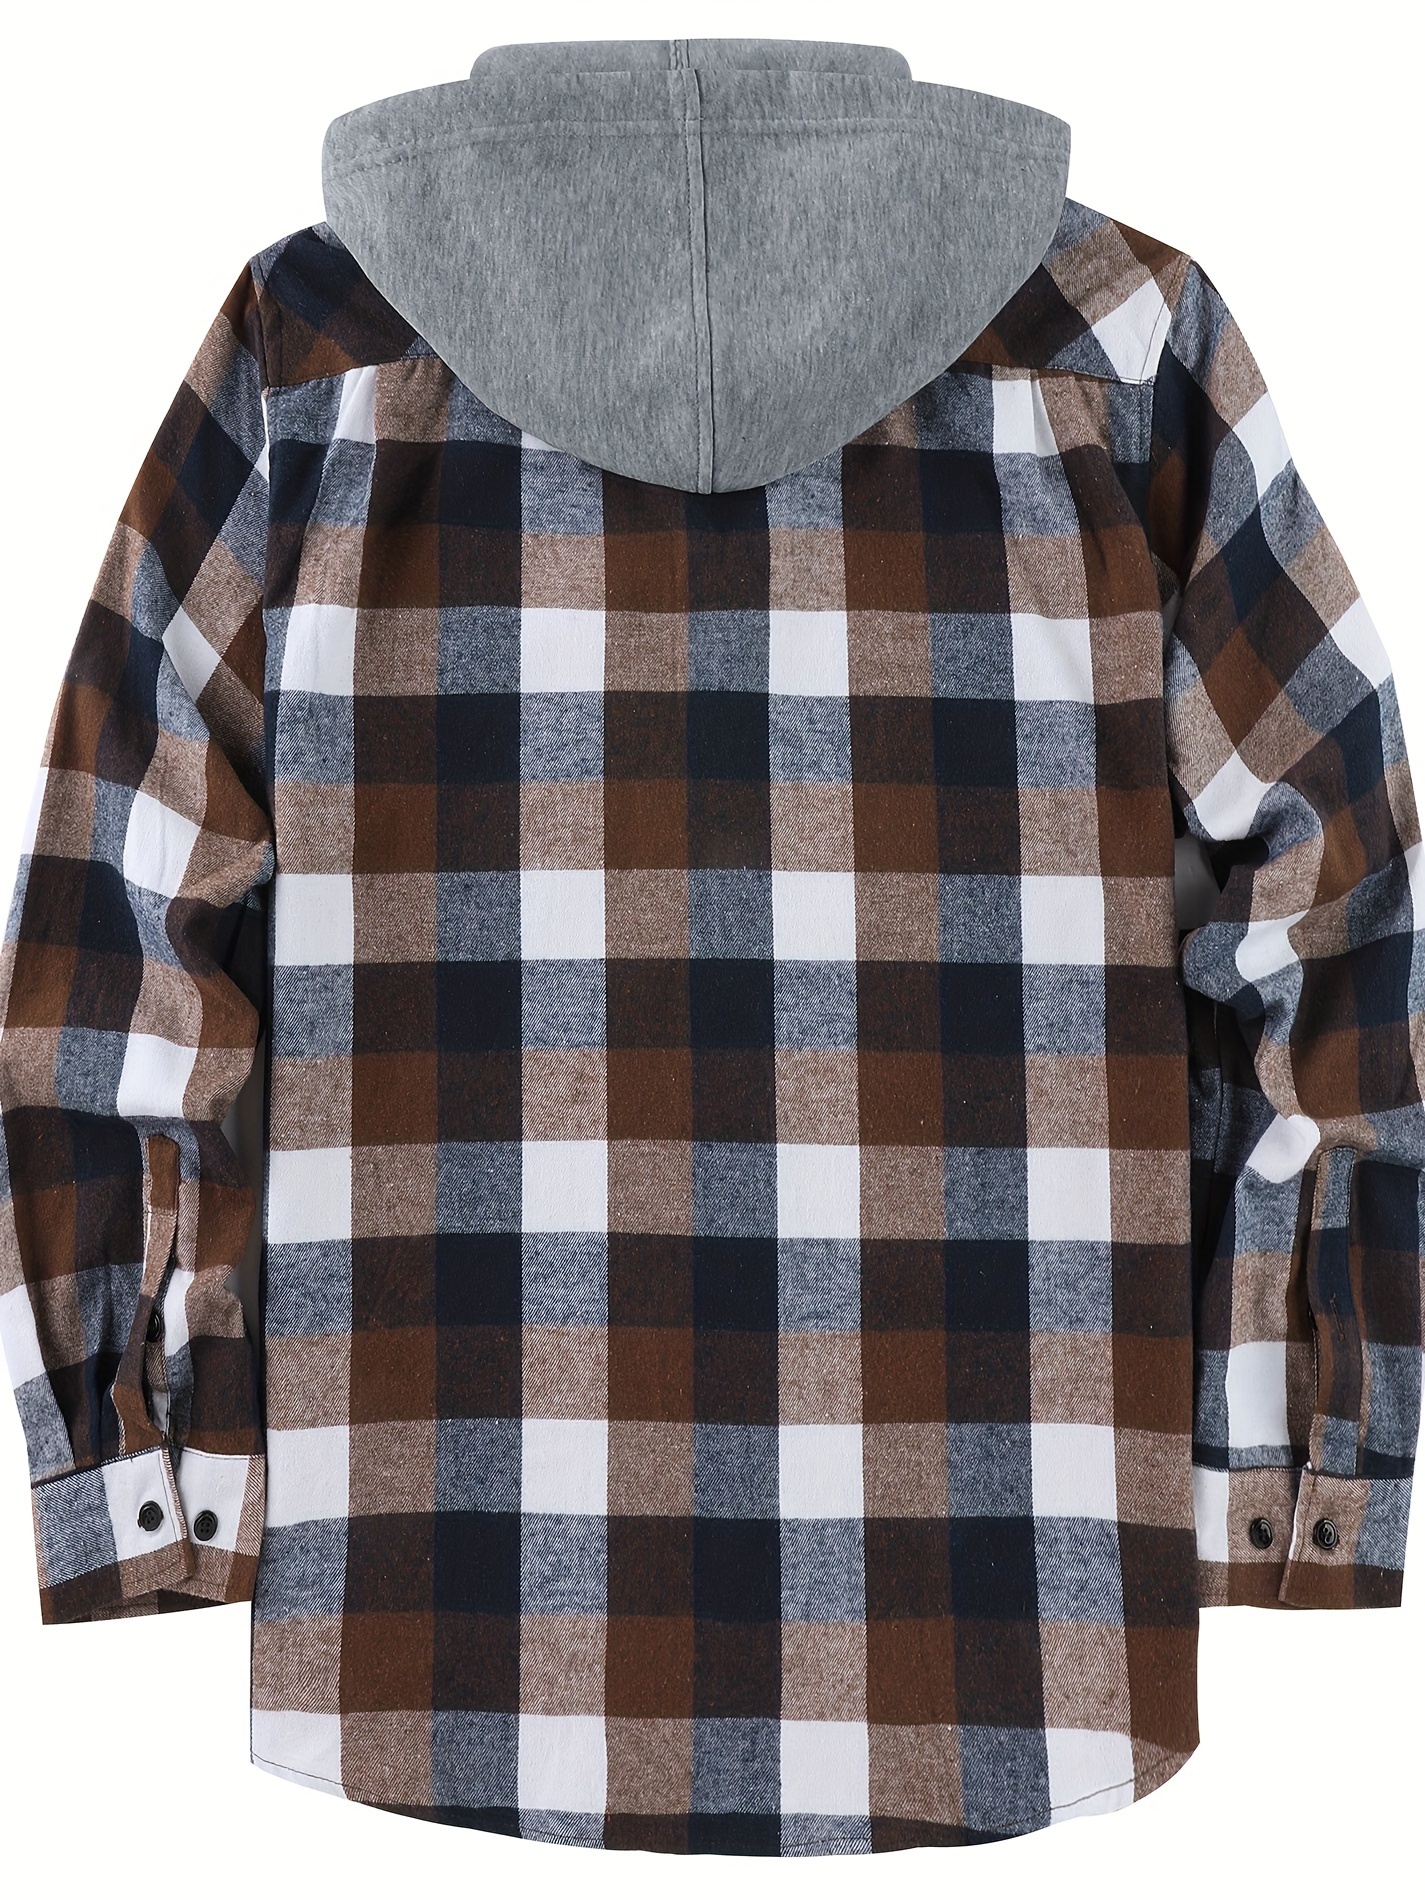 Plaid Pattern Hooded Long Sleeve Shirt, Men's Pocket Slight Stretch Casual Fall/Winter Color Block Design, Black and White Buffalo Plaid Shirt